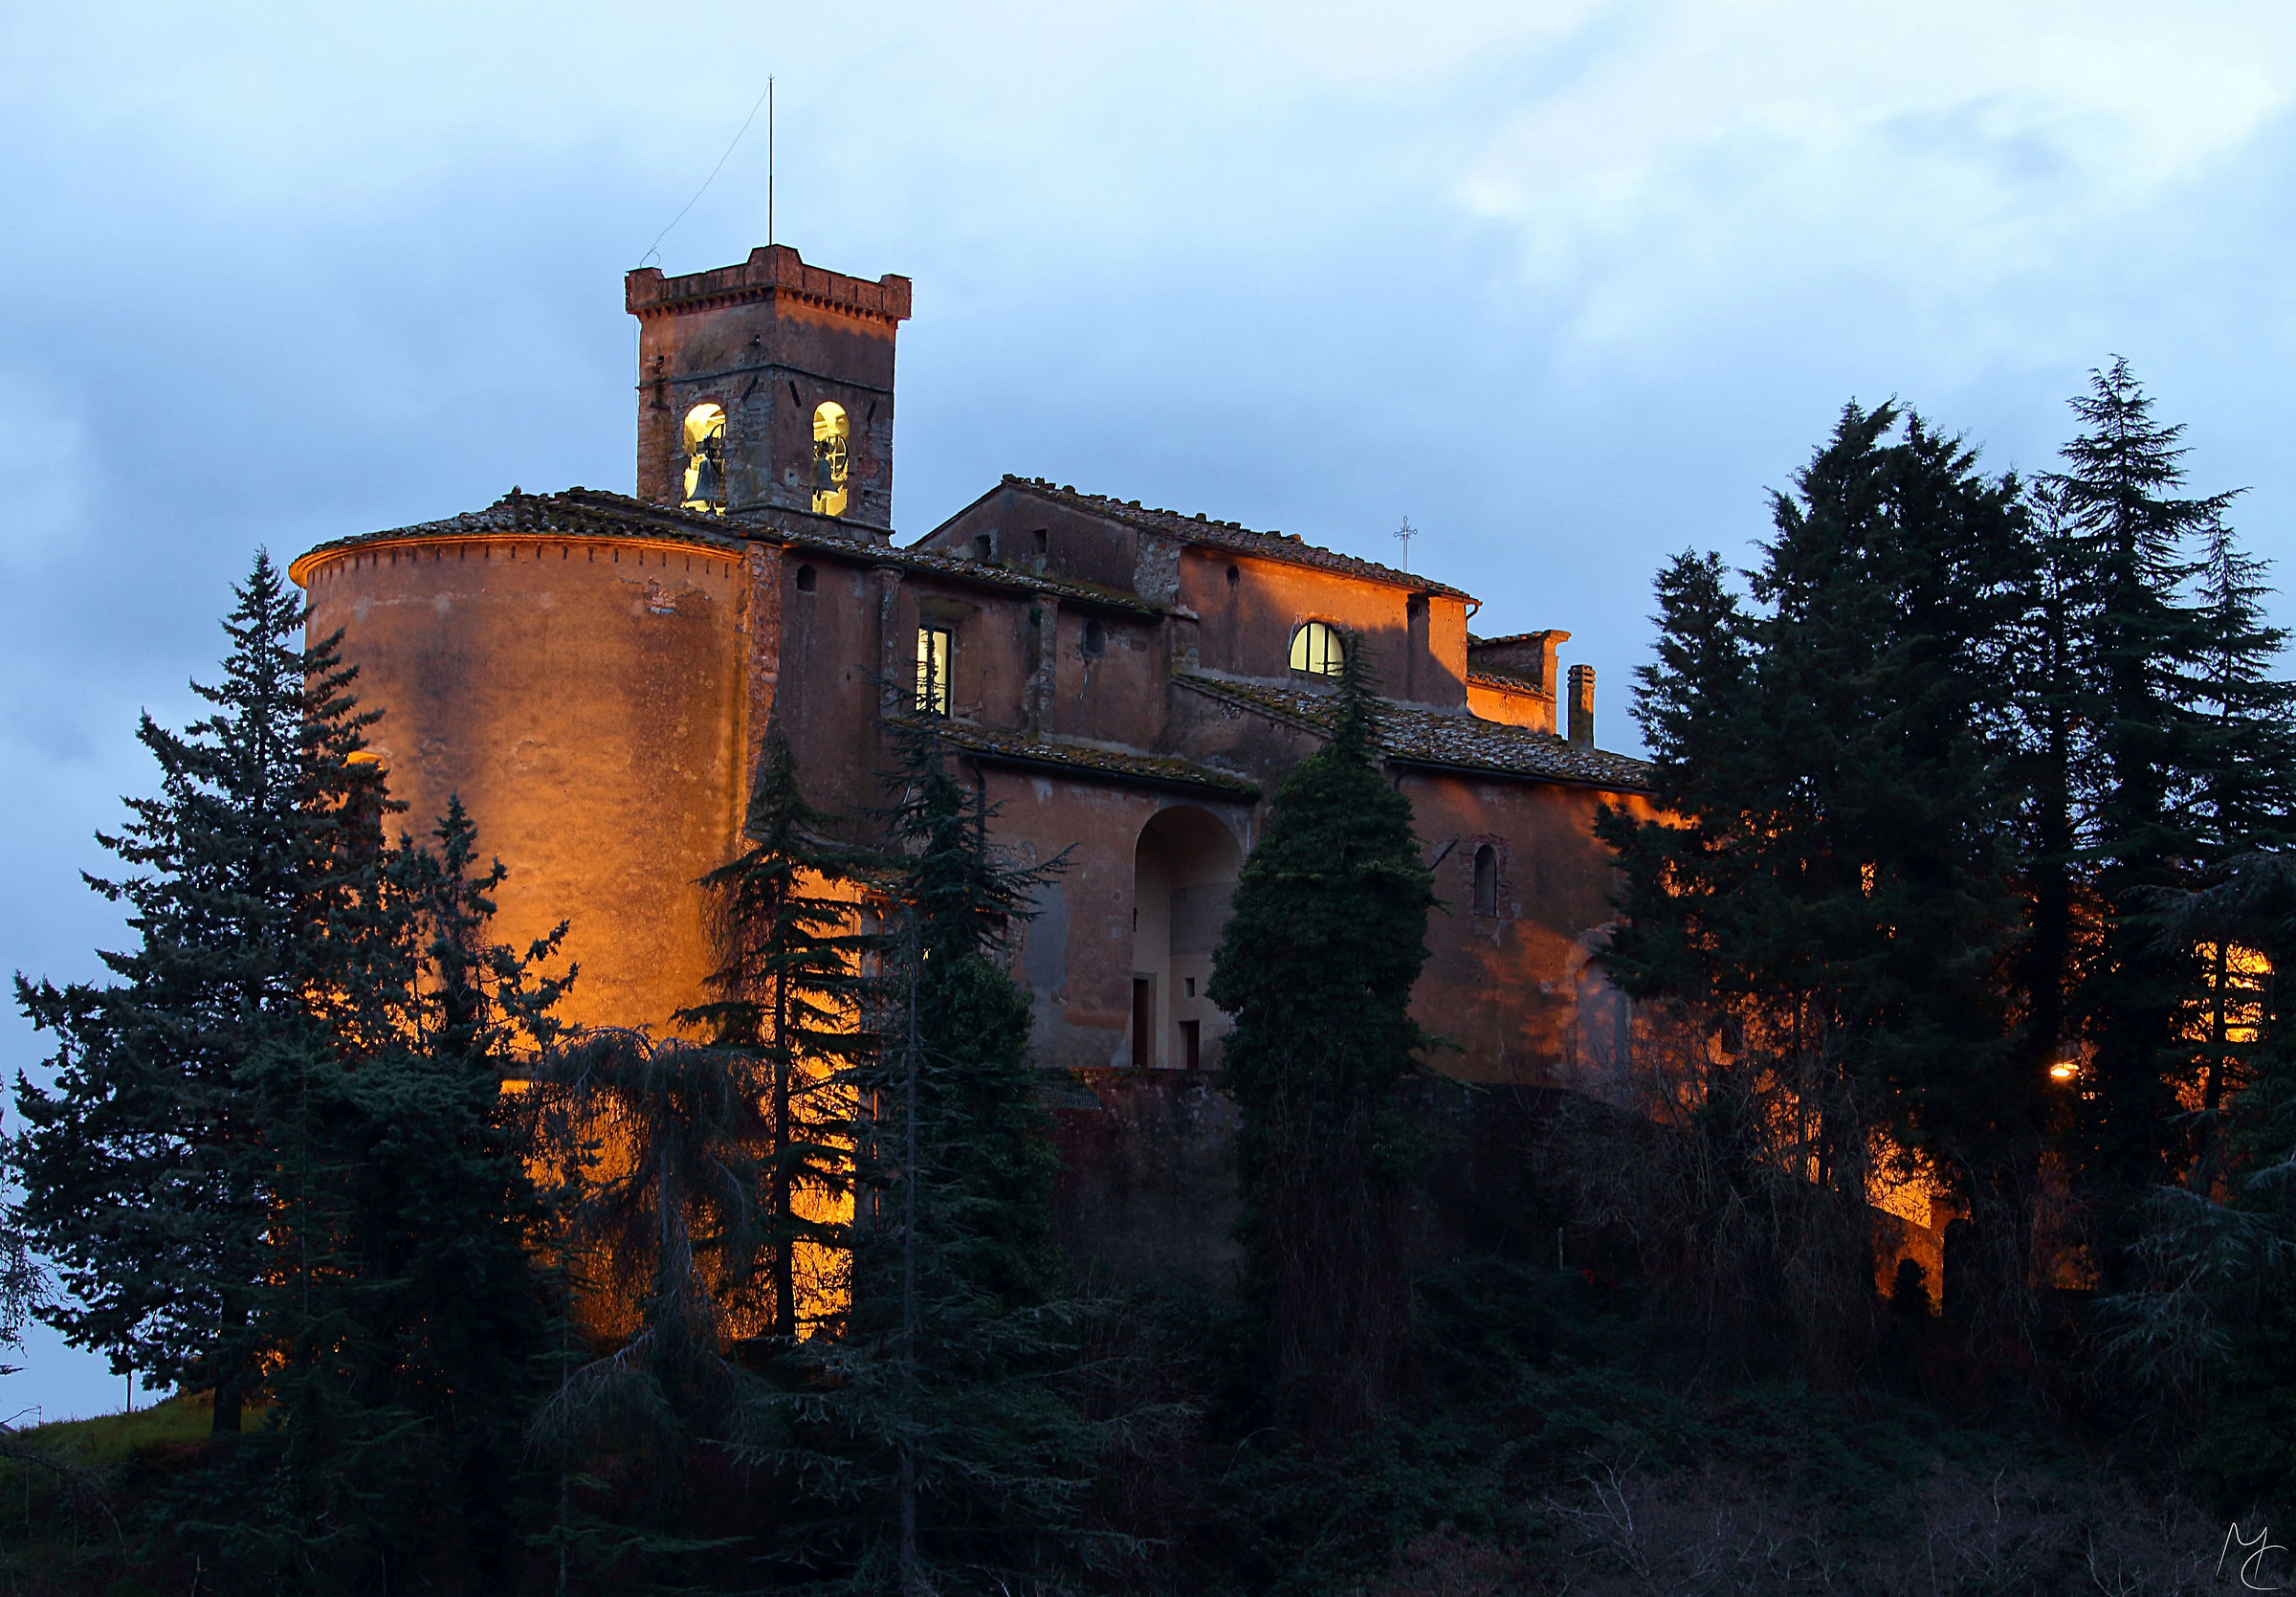 The "Castle" of Chianni...